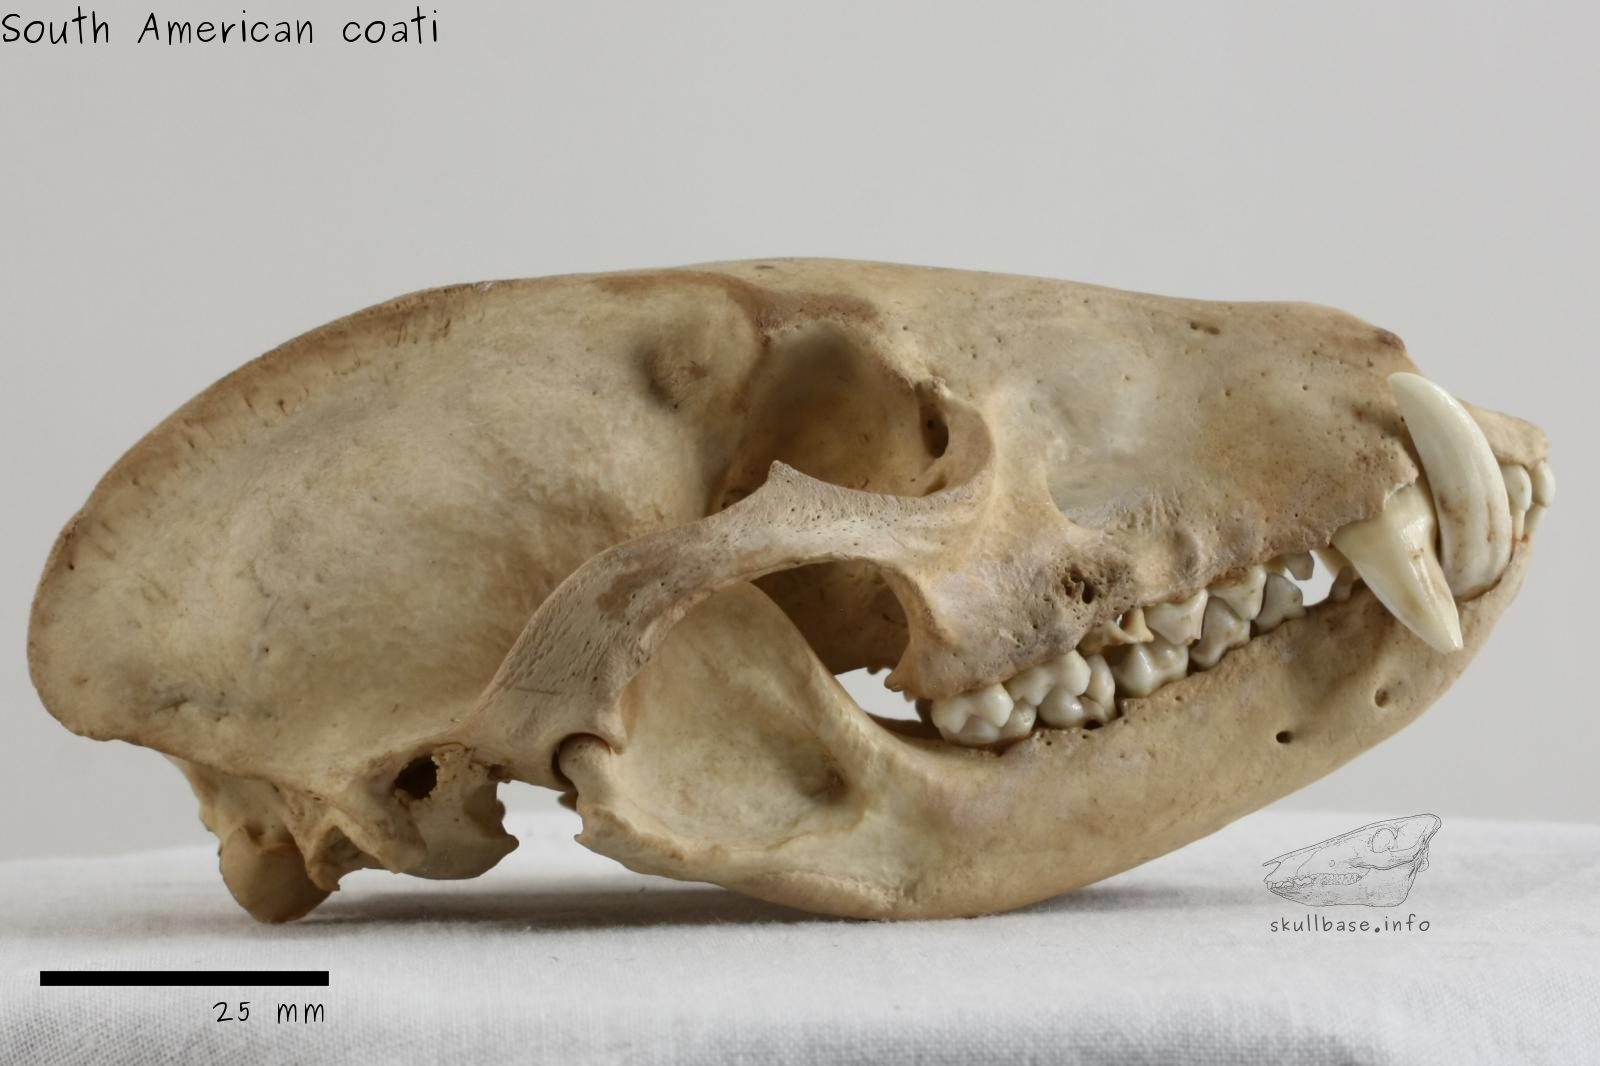 South American coati (Nasua nasua) skull lateral view